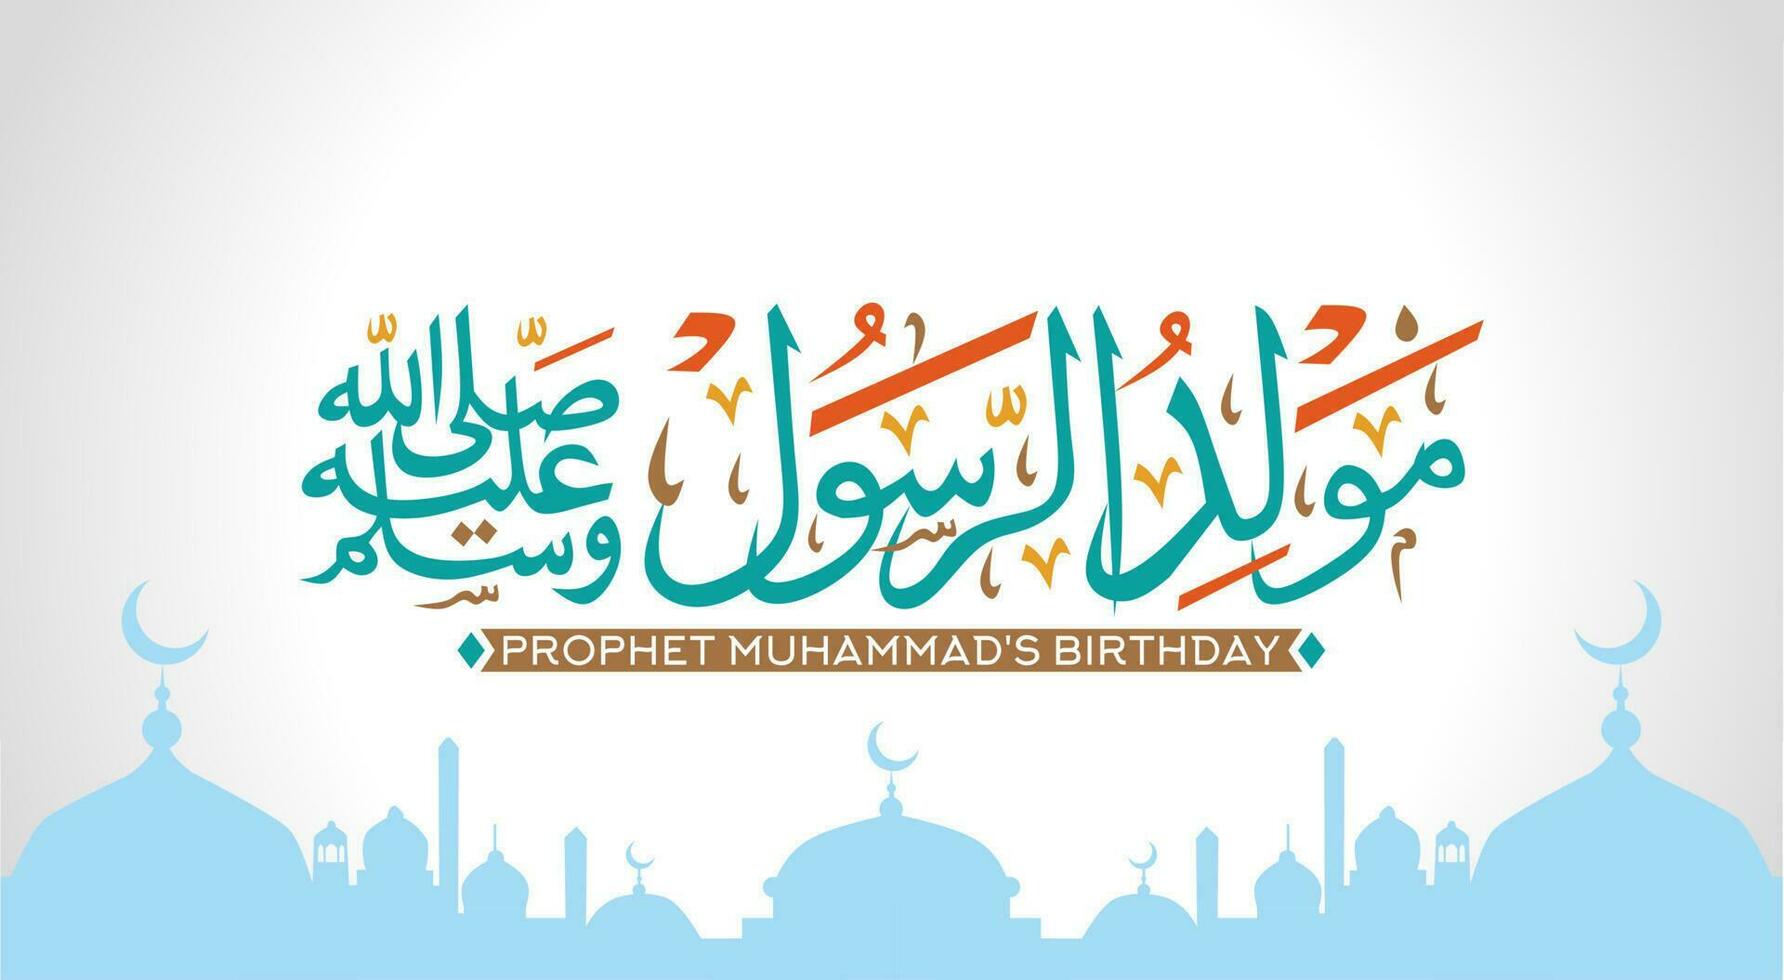 Happy Prophet Muhammad Birthday greeting card. Vector illustration.